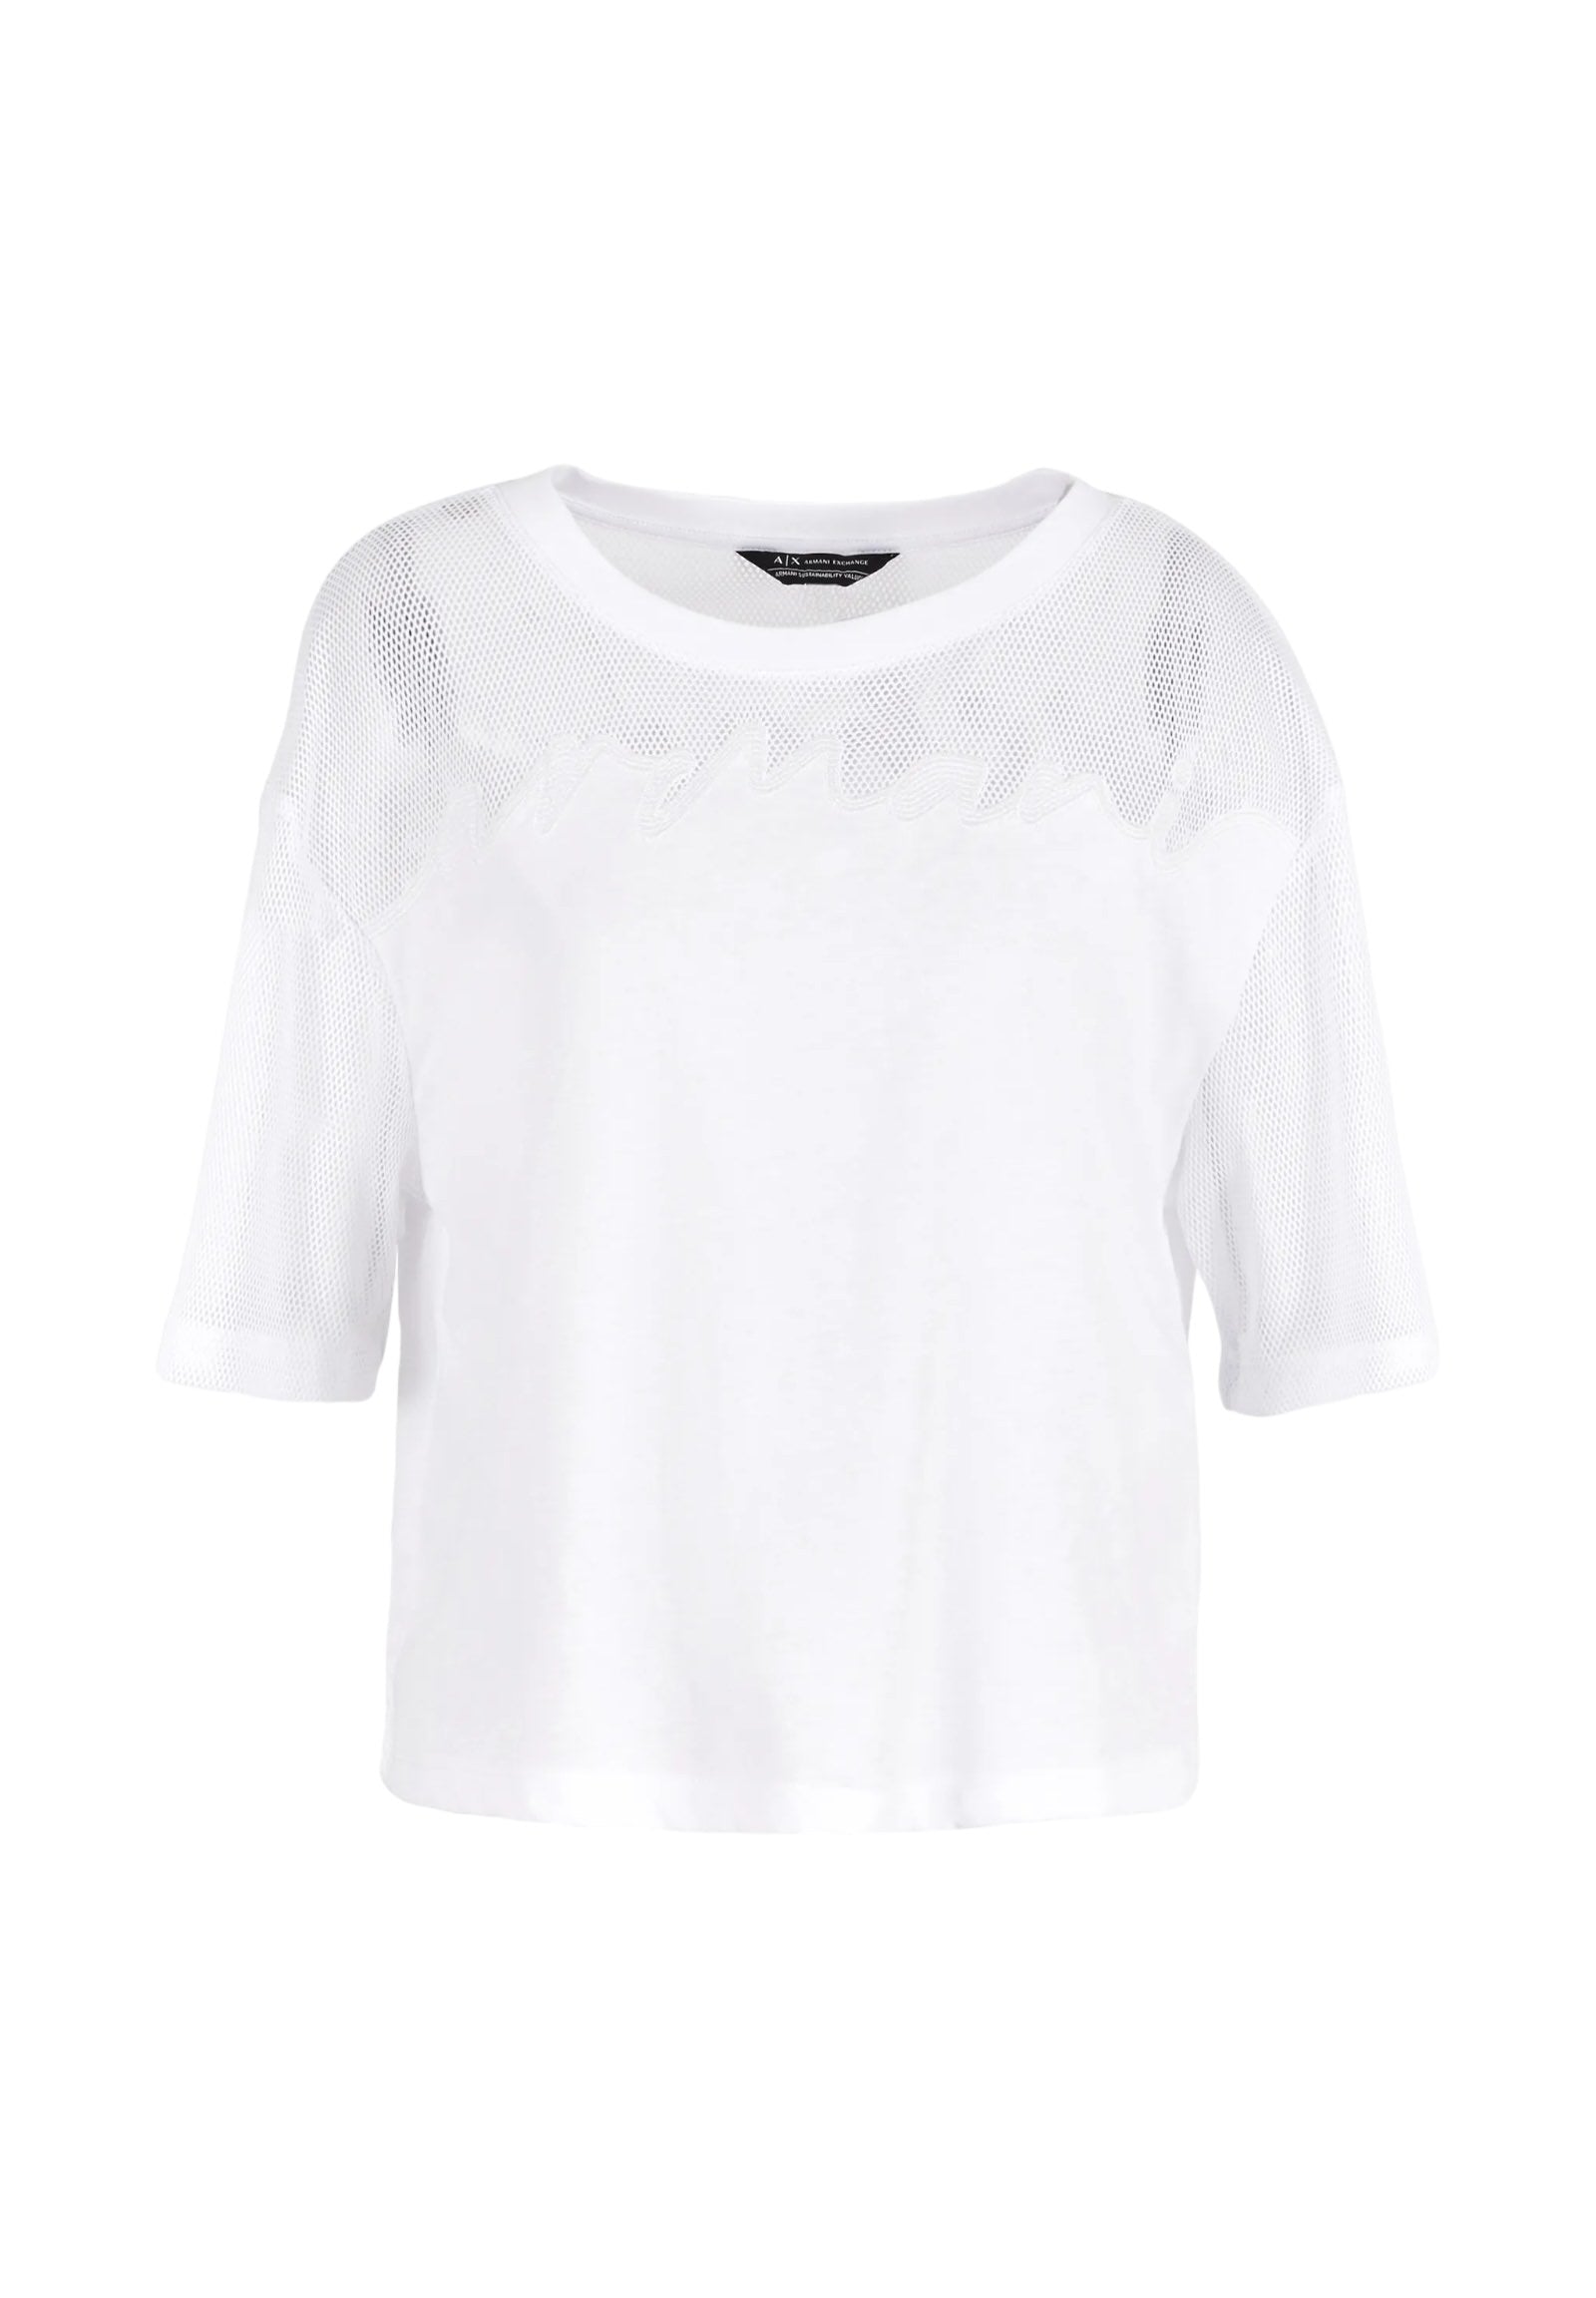 3dyt34 Optic White T-Shirt